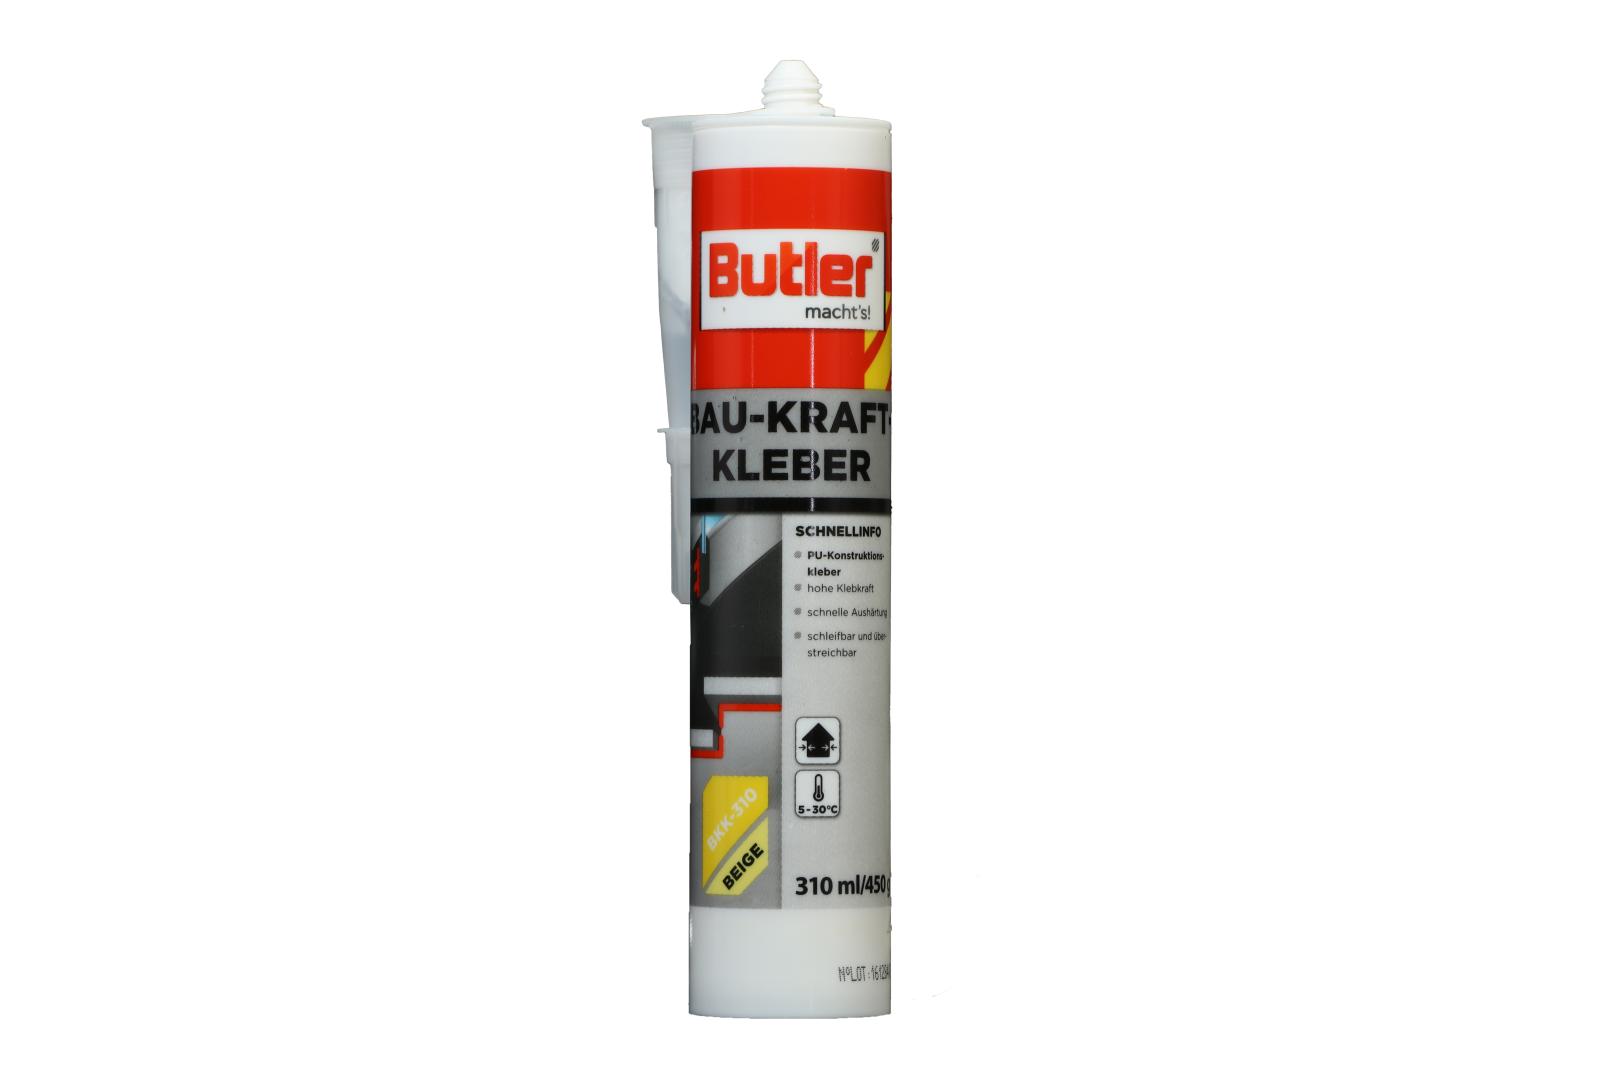 Butler macht's! Bau-Kraftkleber, PU-Klebstoff, 310 ml